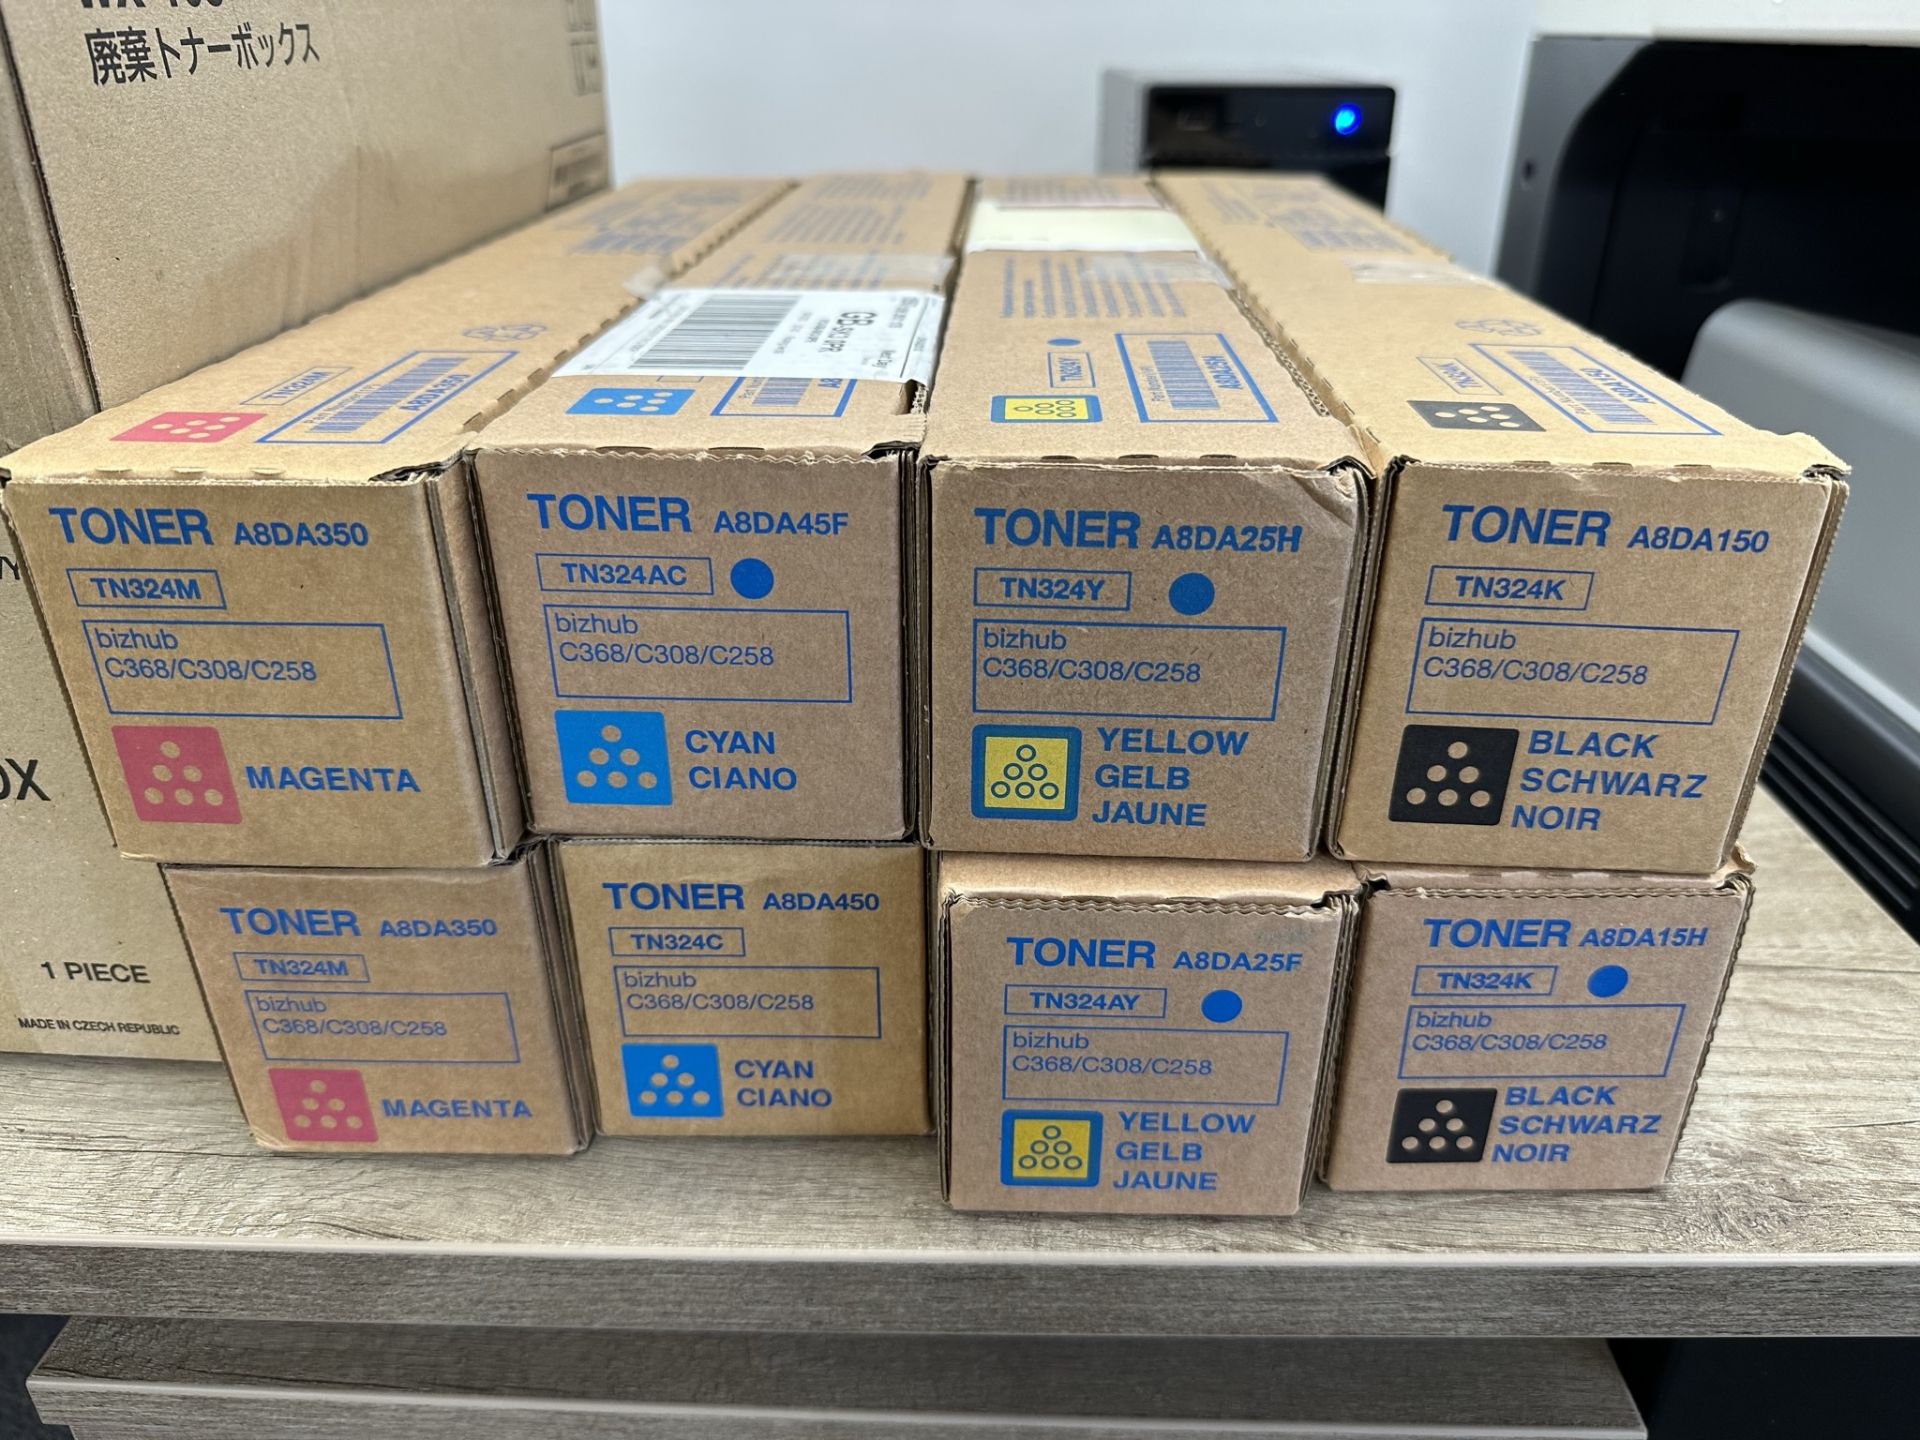 8 x Konica Minolta Toner Cartridges w/ 2 x Waste Toner Boxes - Image 2 of 4